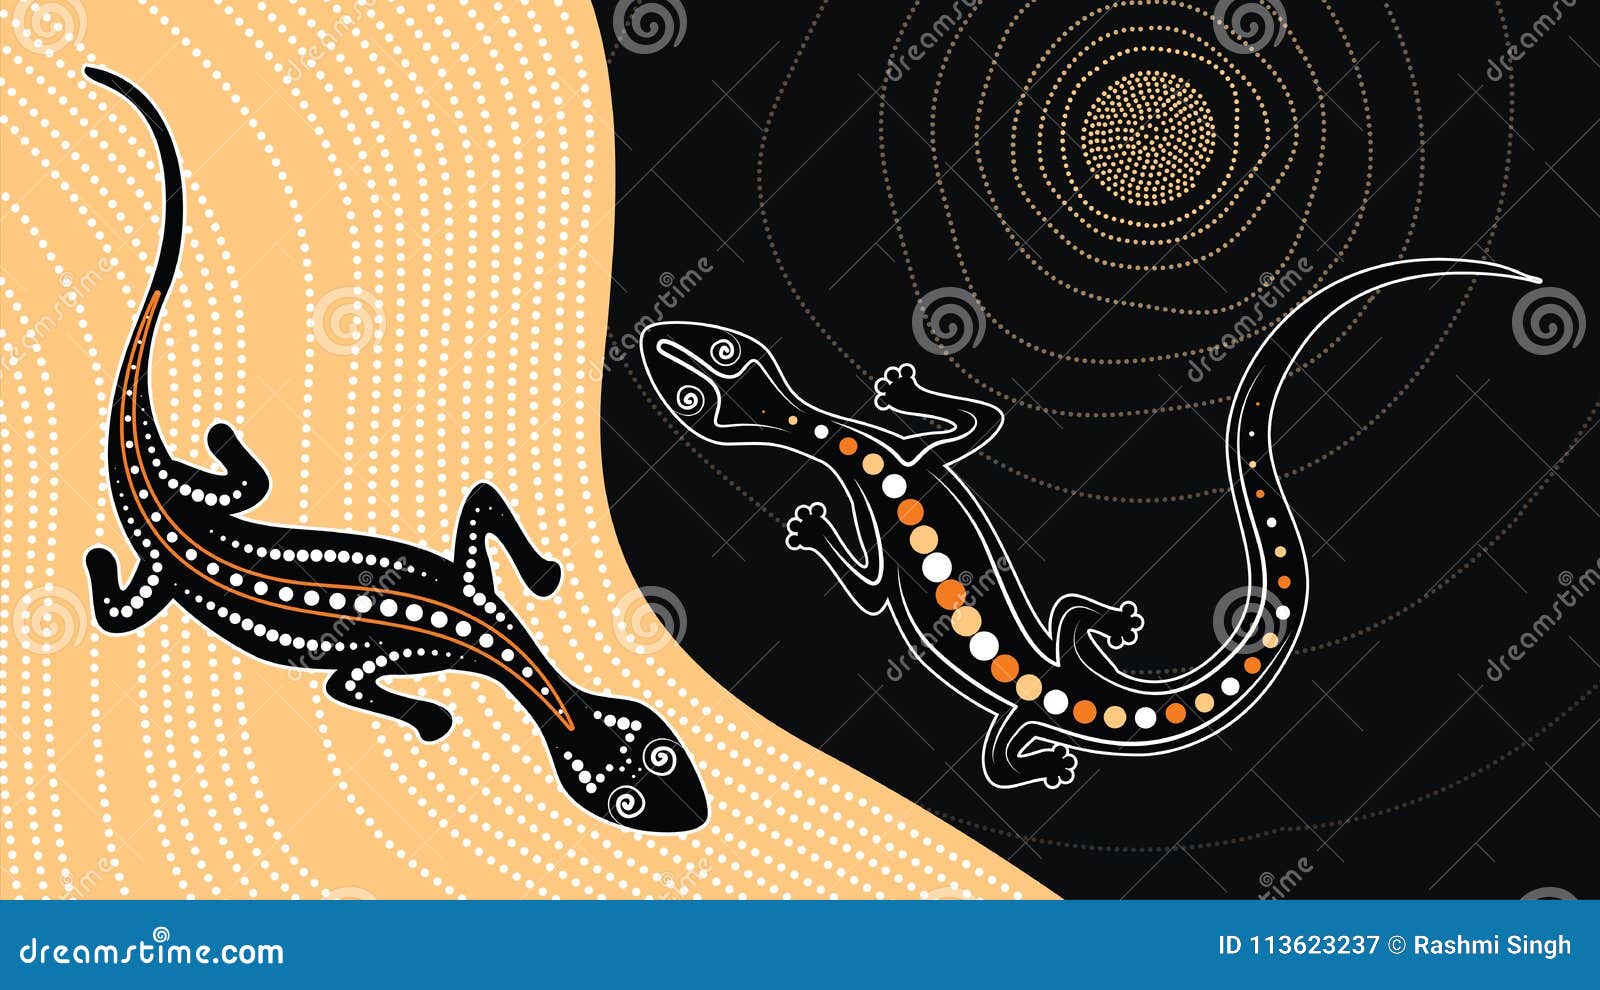 lizard , aboriginal art background with lizard